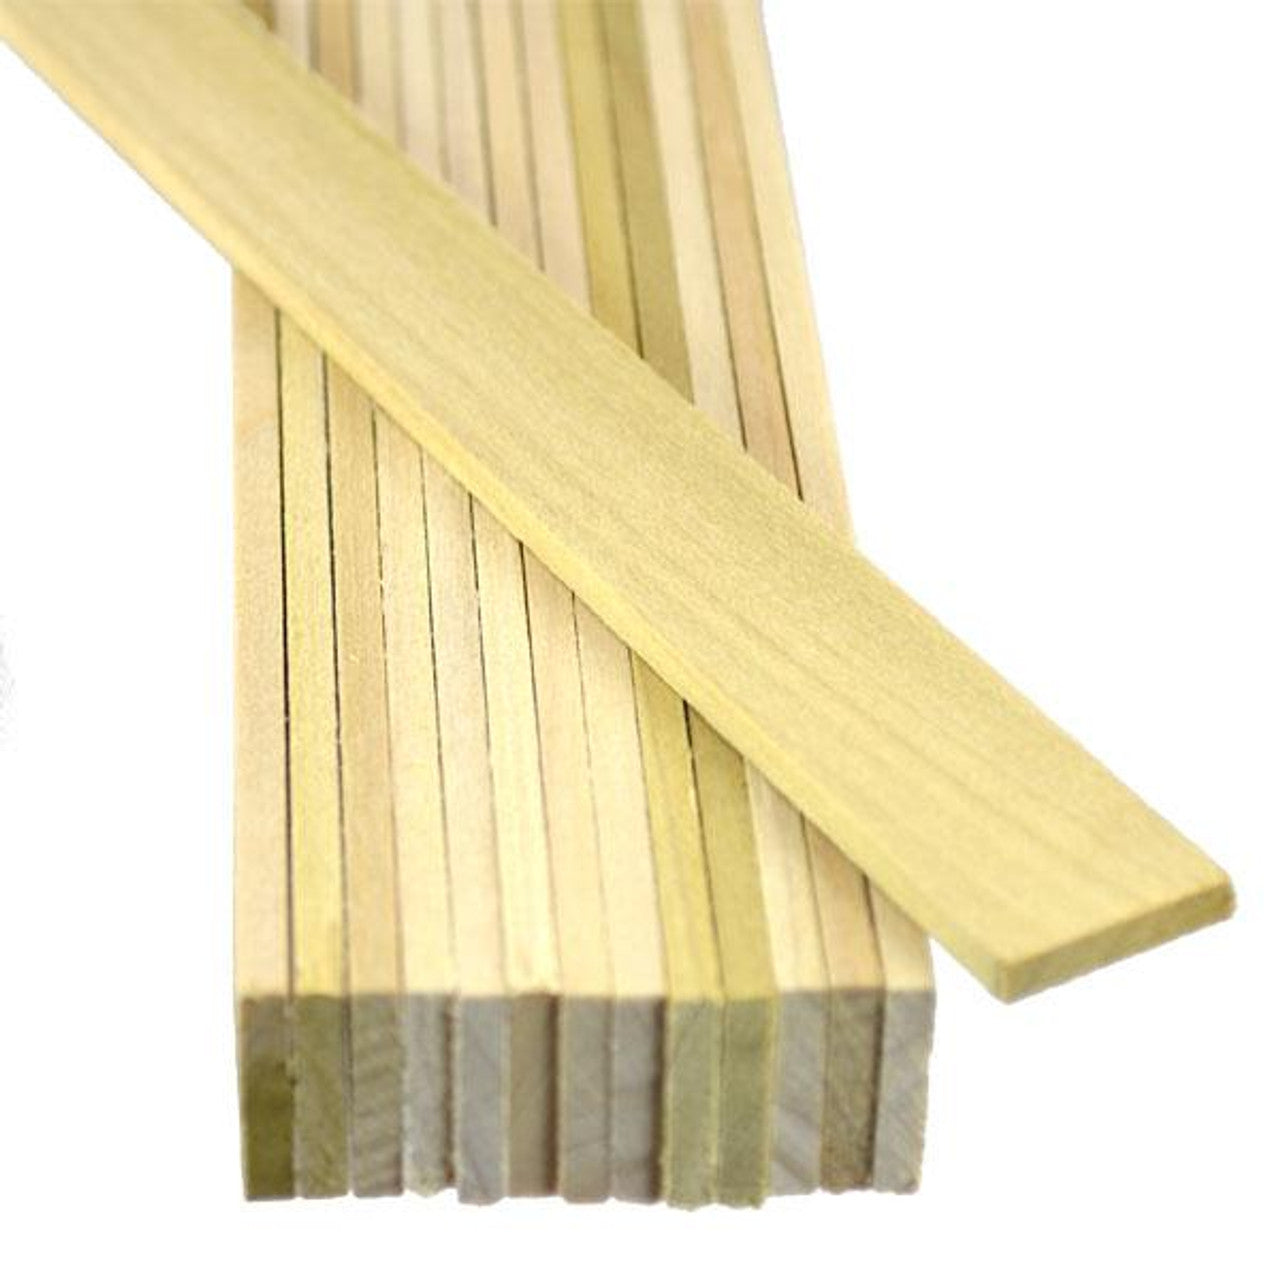 Leclerc Wooden Sticks (12/pkg)